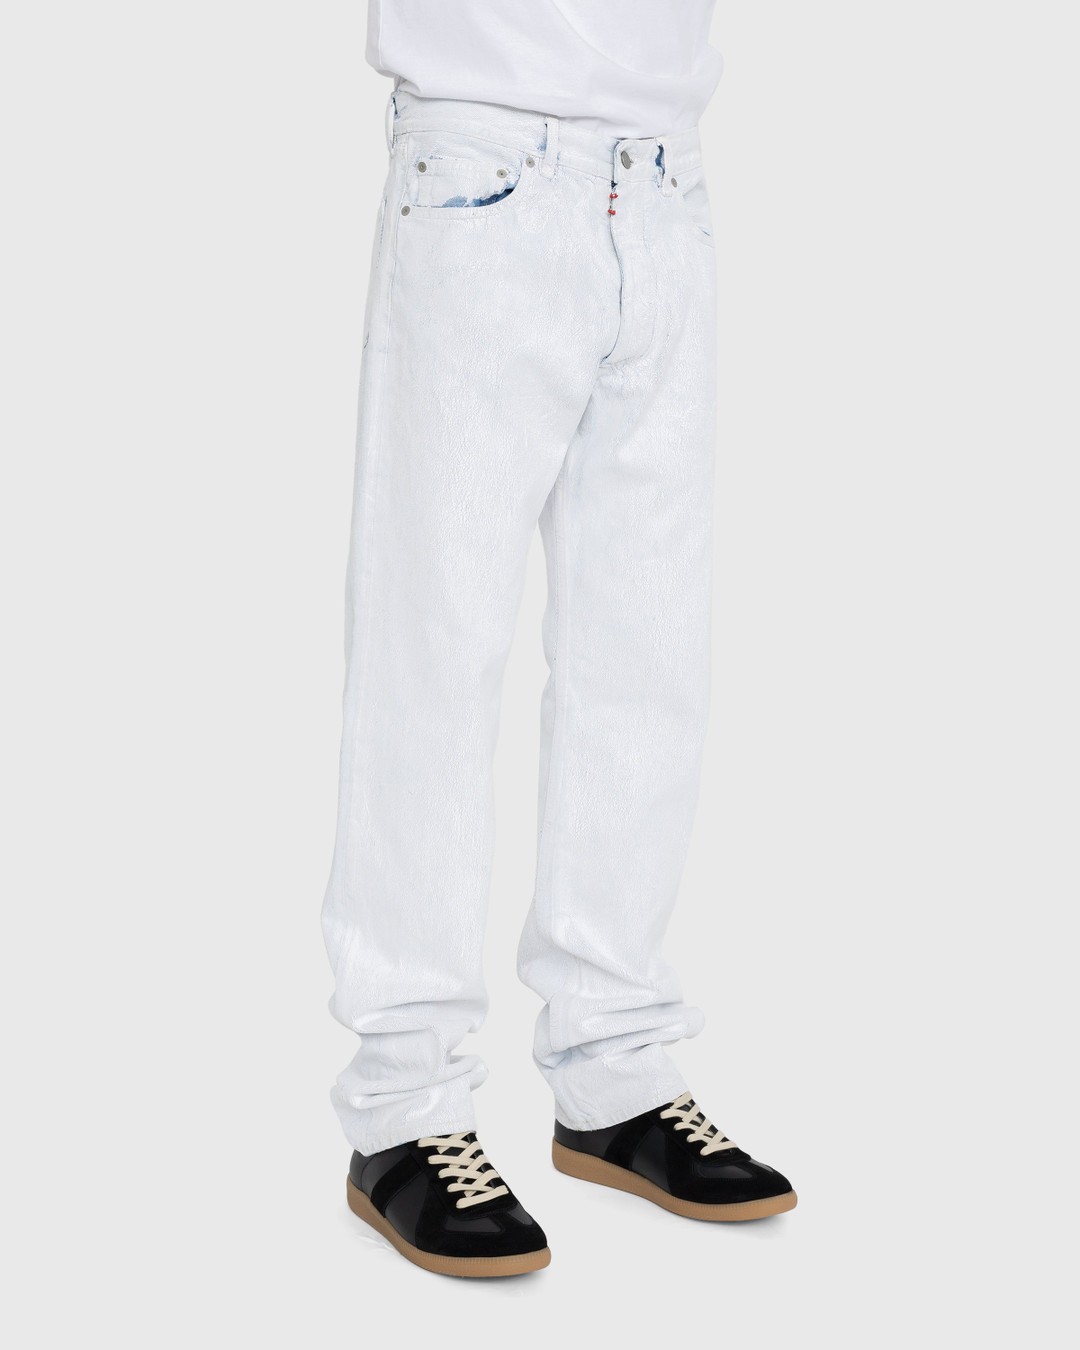 Maison Margiela – 5-Pocket Paint Jeans White - Denim - White - Image 3